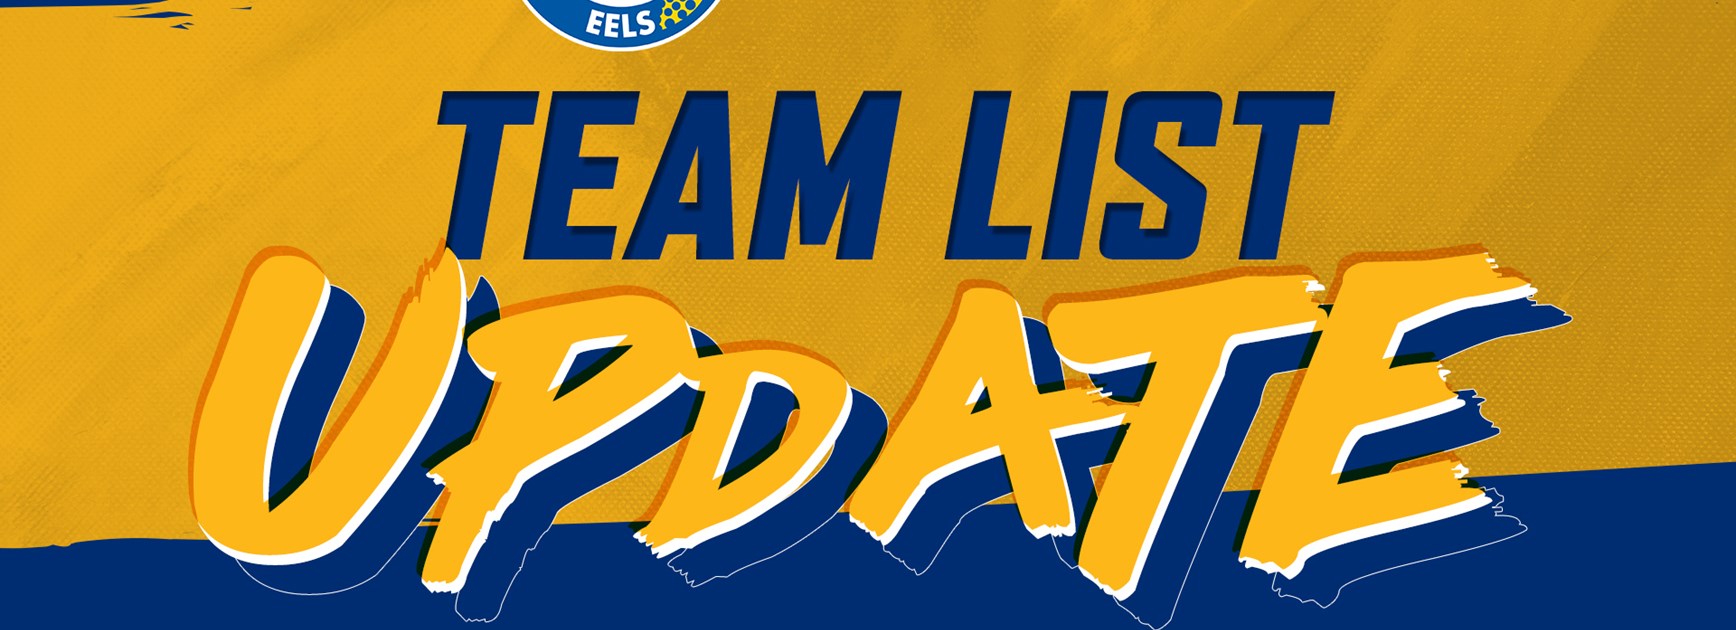 Eels v Sea Eagles Team List Update